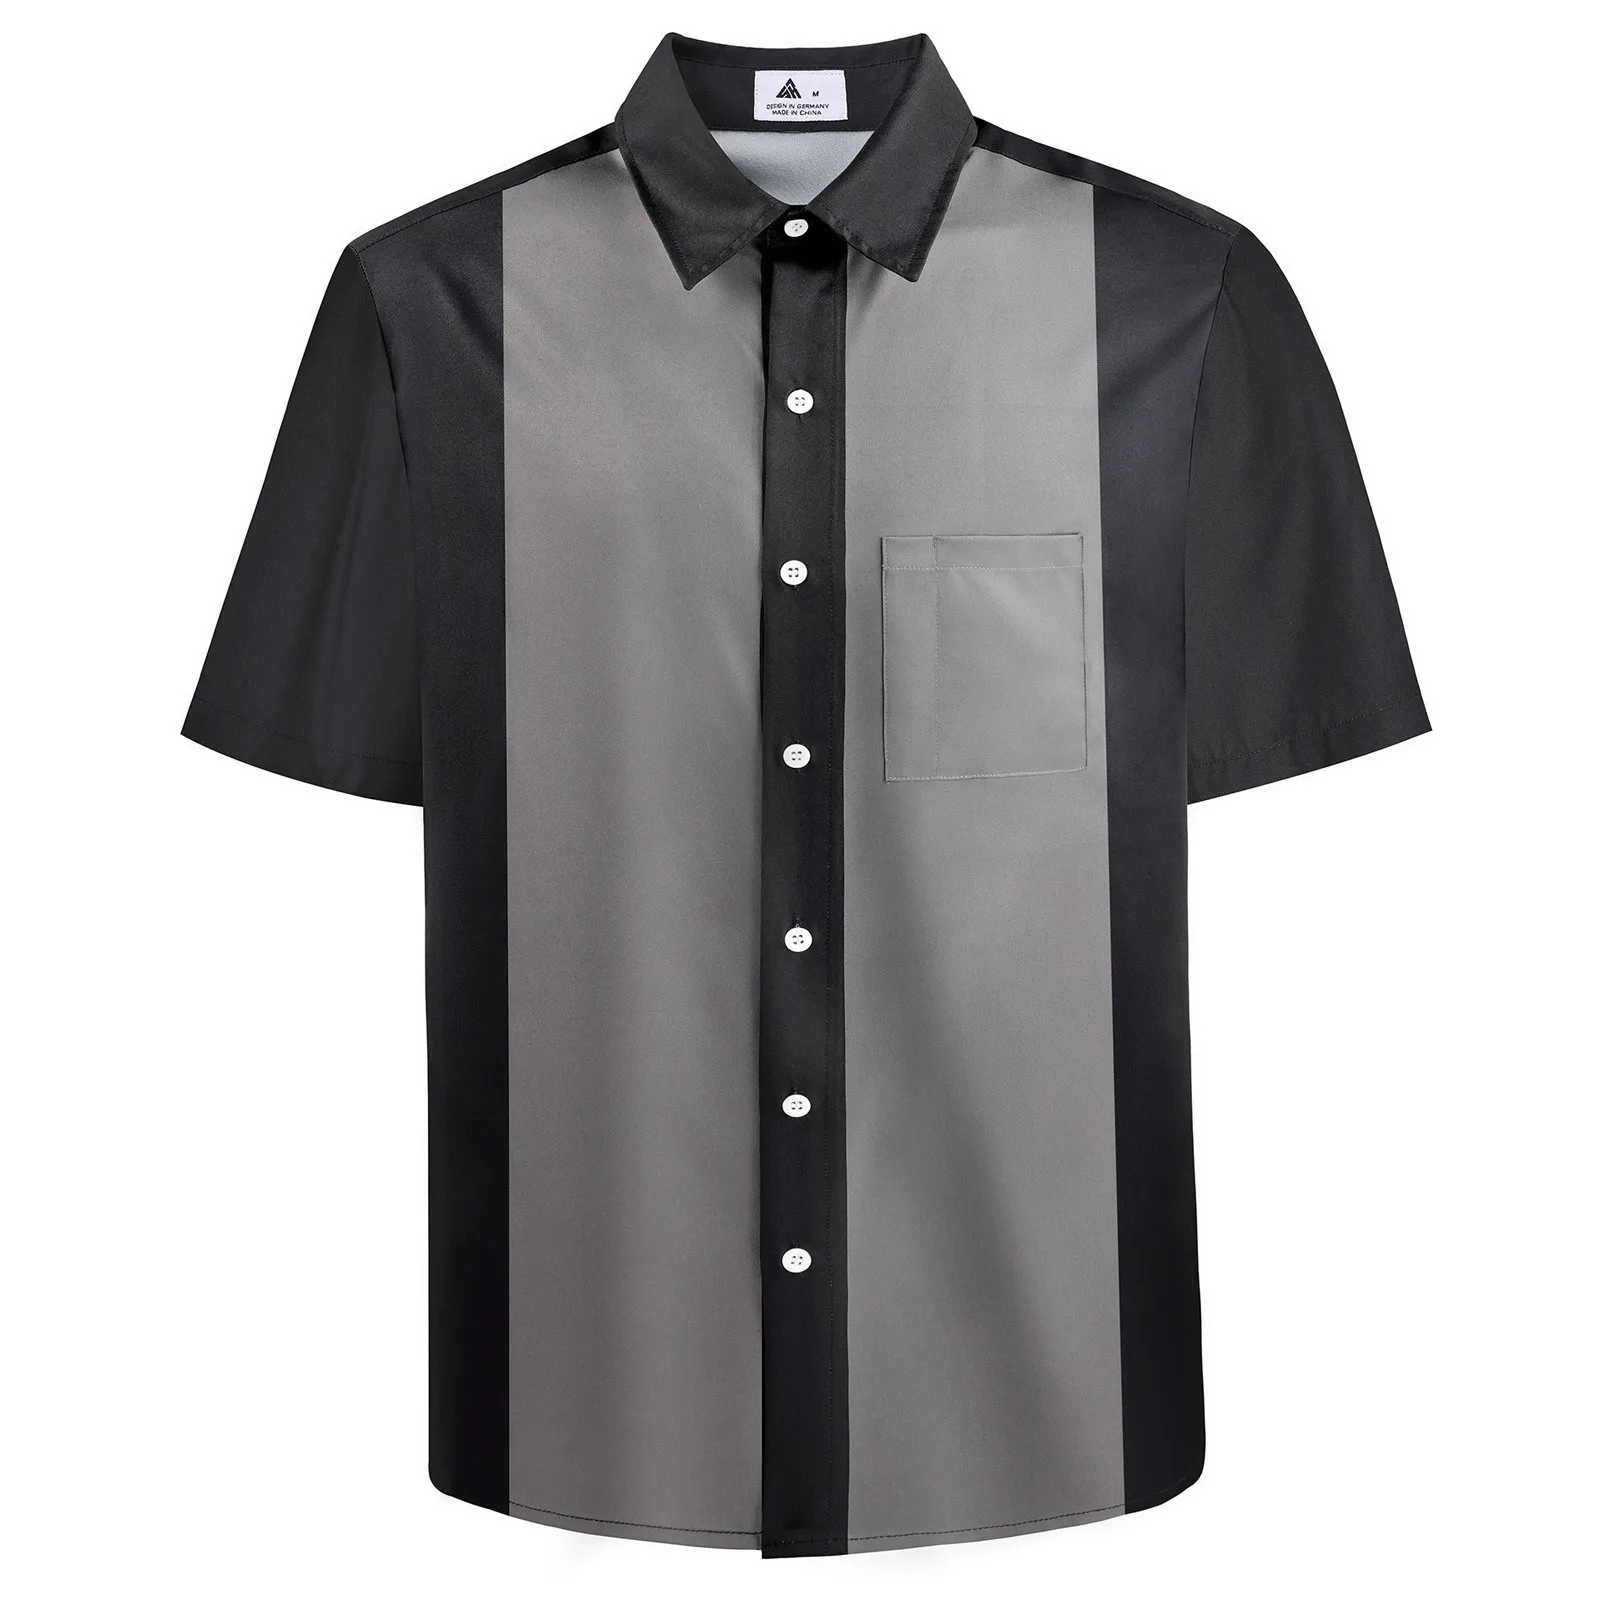 

Men's Vintage Bowling Shirt Short Sleeve Button Down Summer Beach Casual Shirts Fitted Dress Shirt